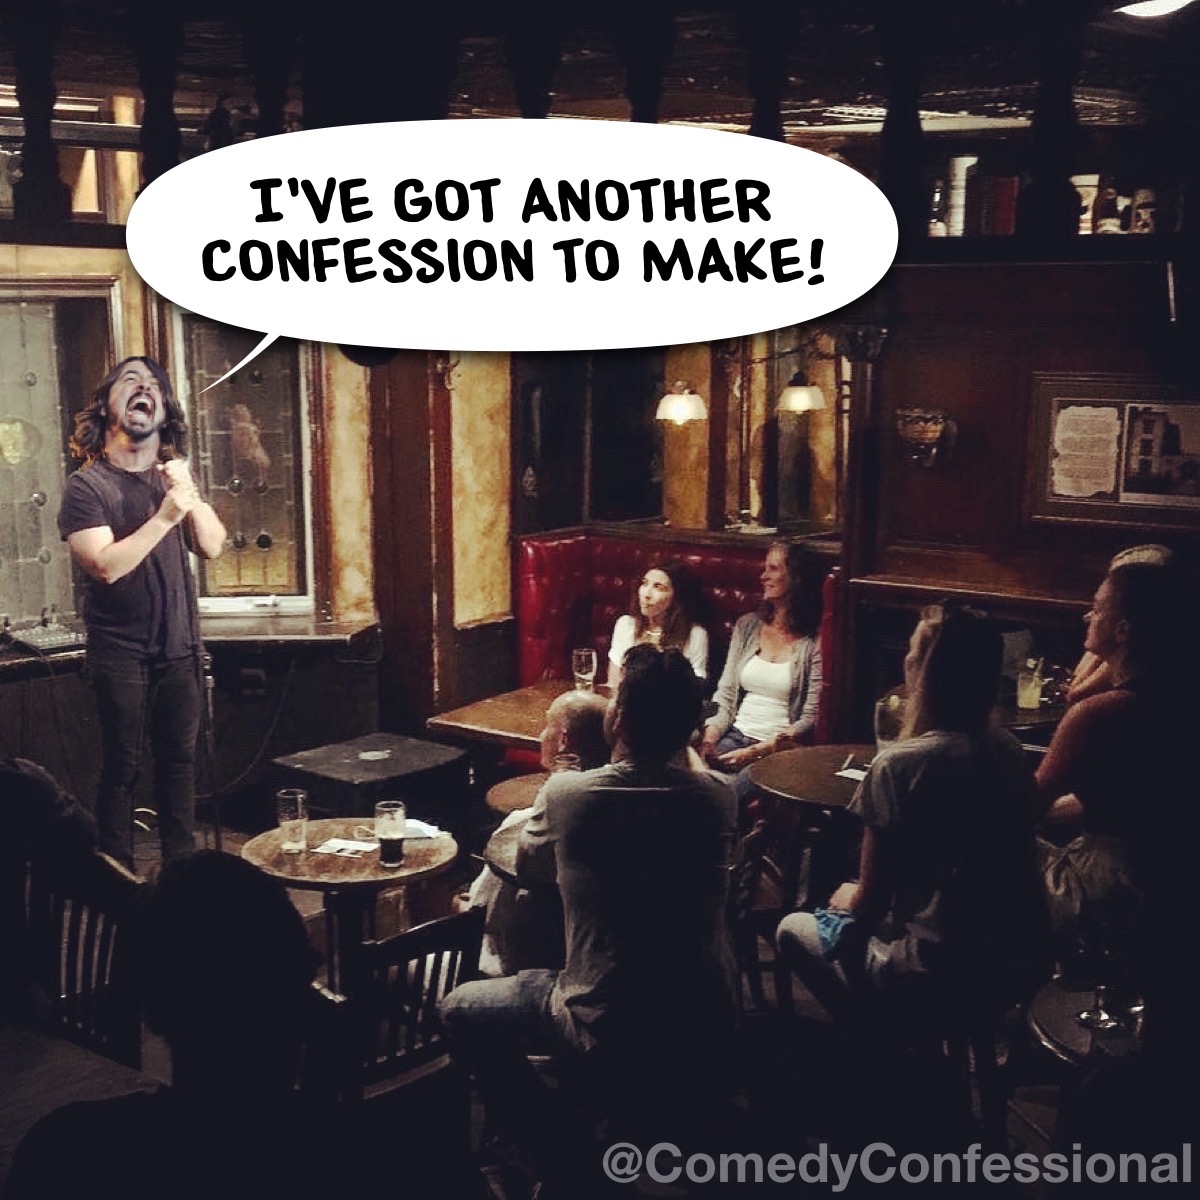 Comedy Confessional